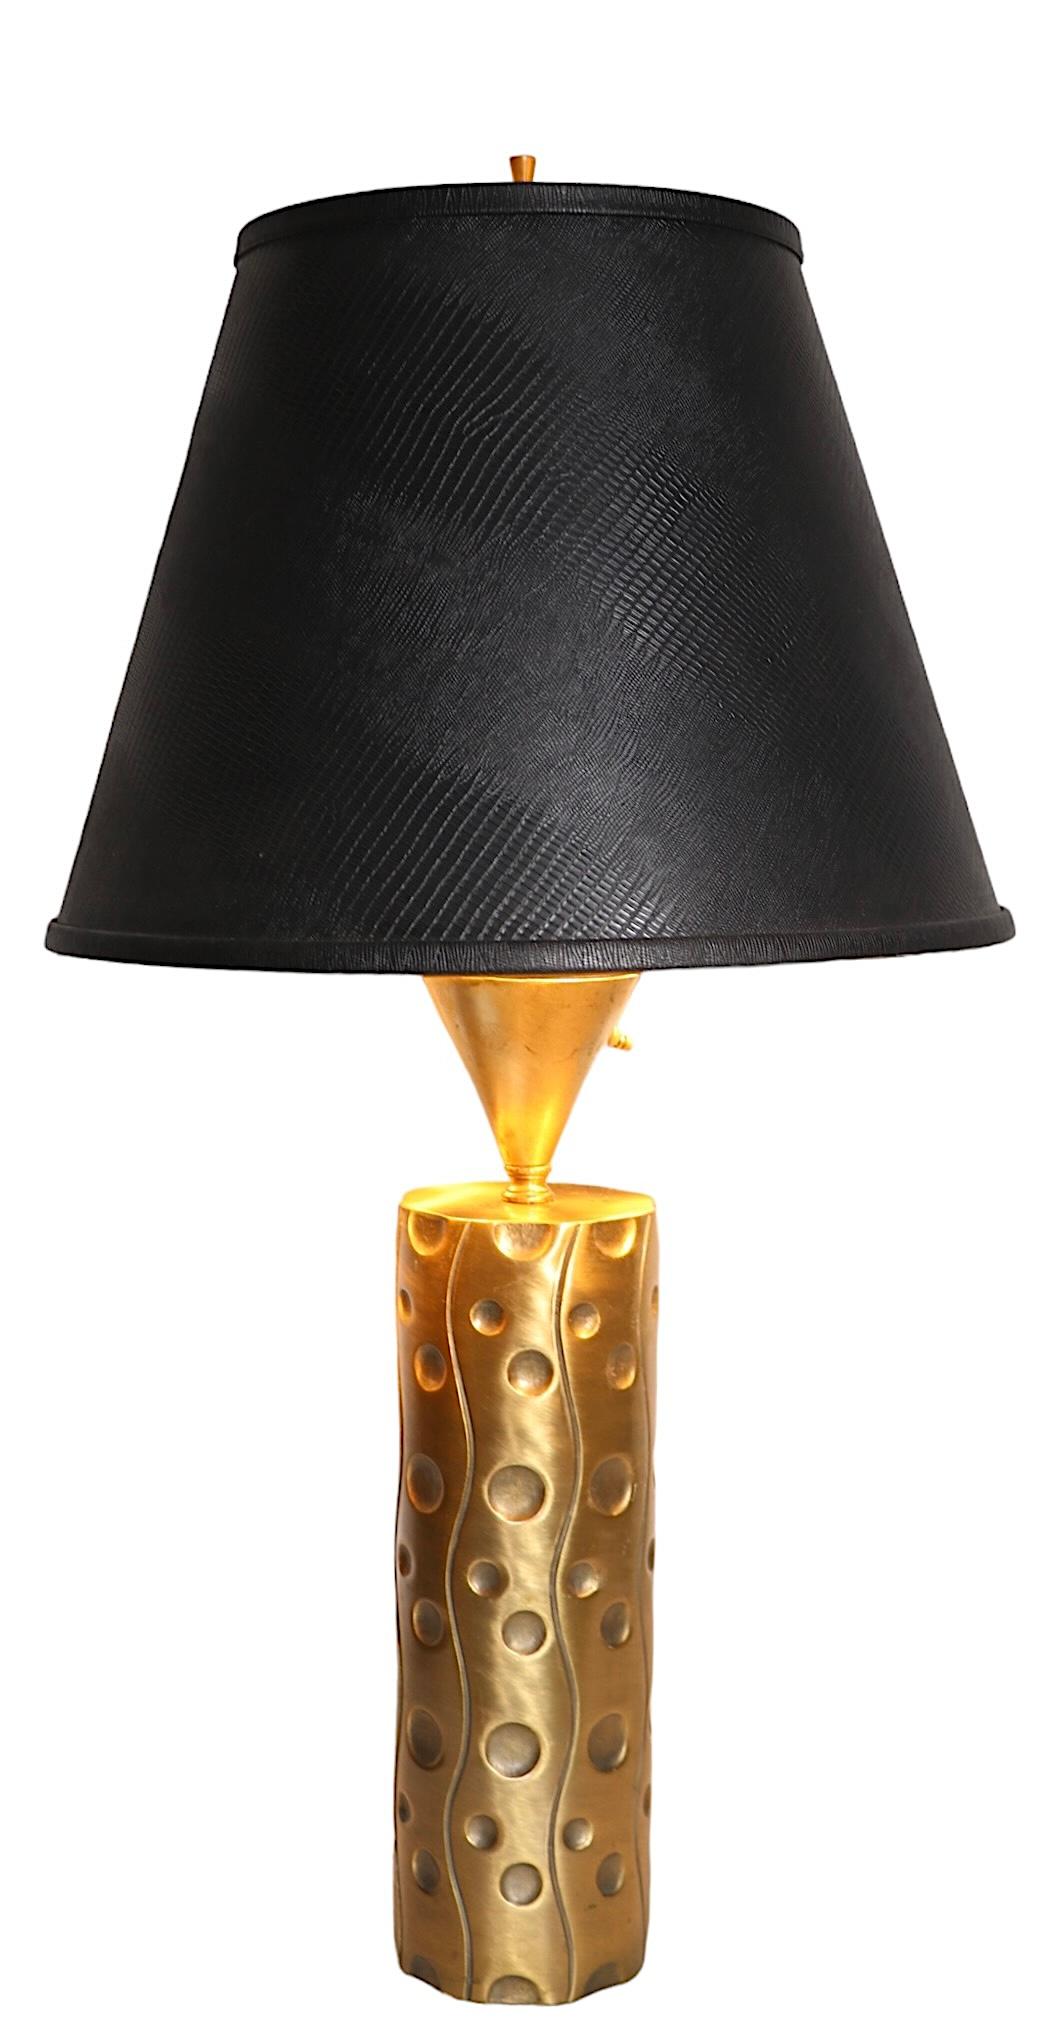  Westwood Table Lamp att. Tony Paul c. 1950/1970's  For Sale 2